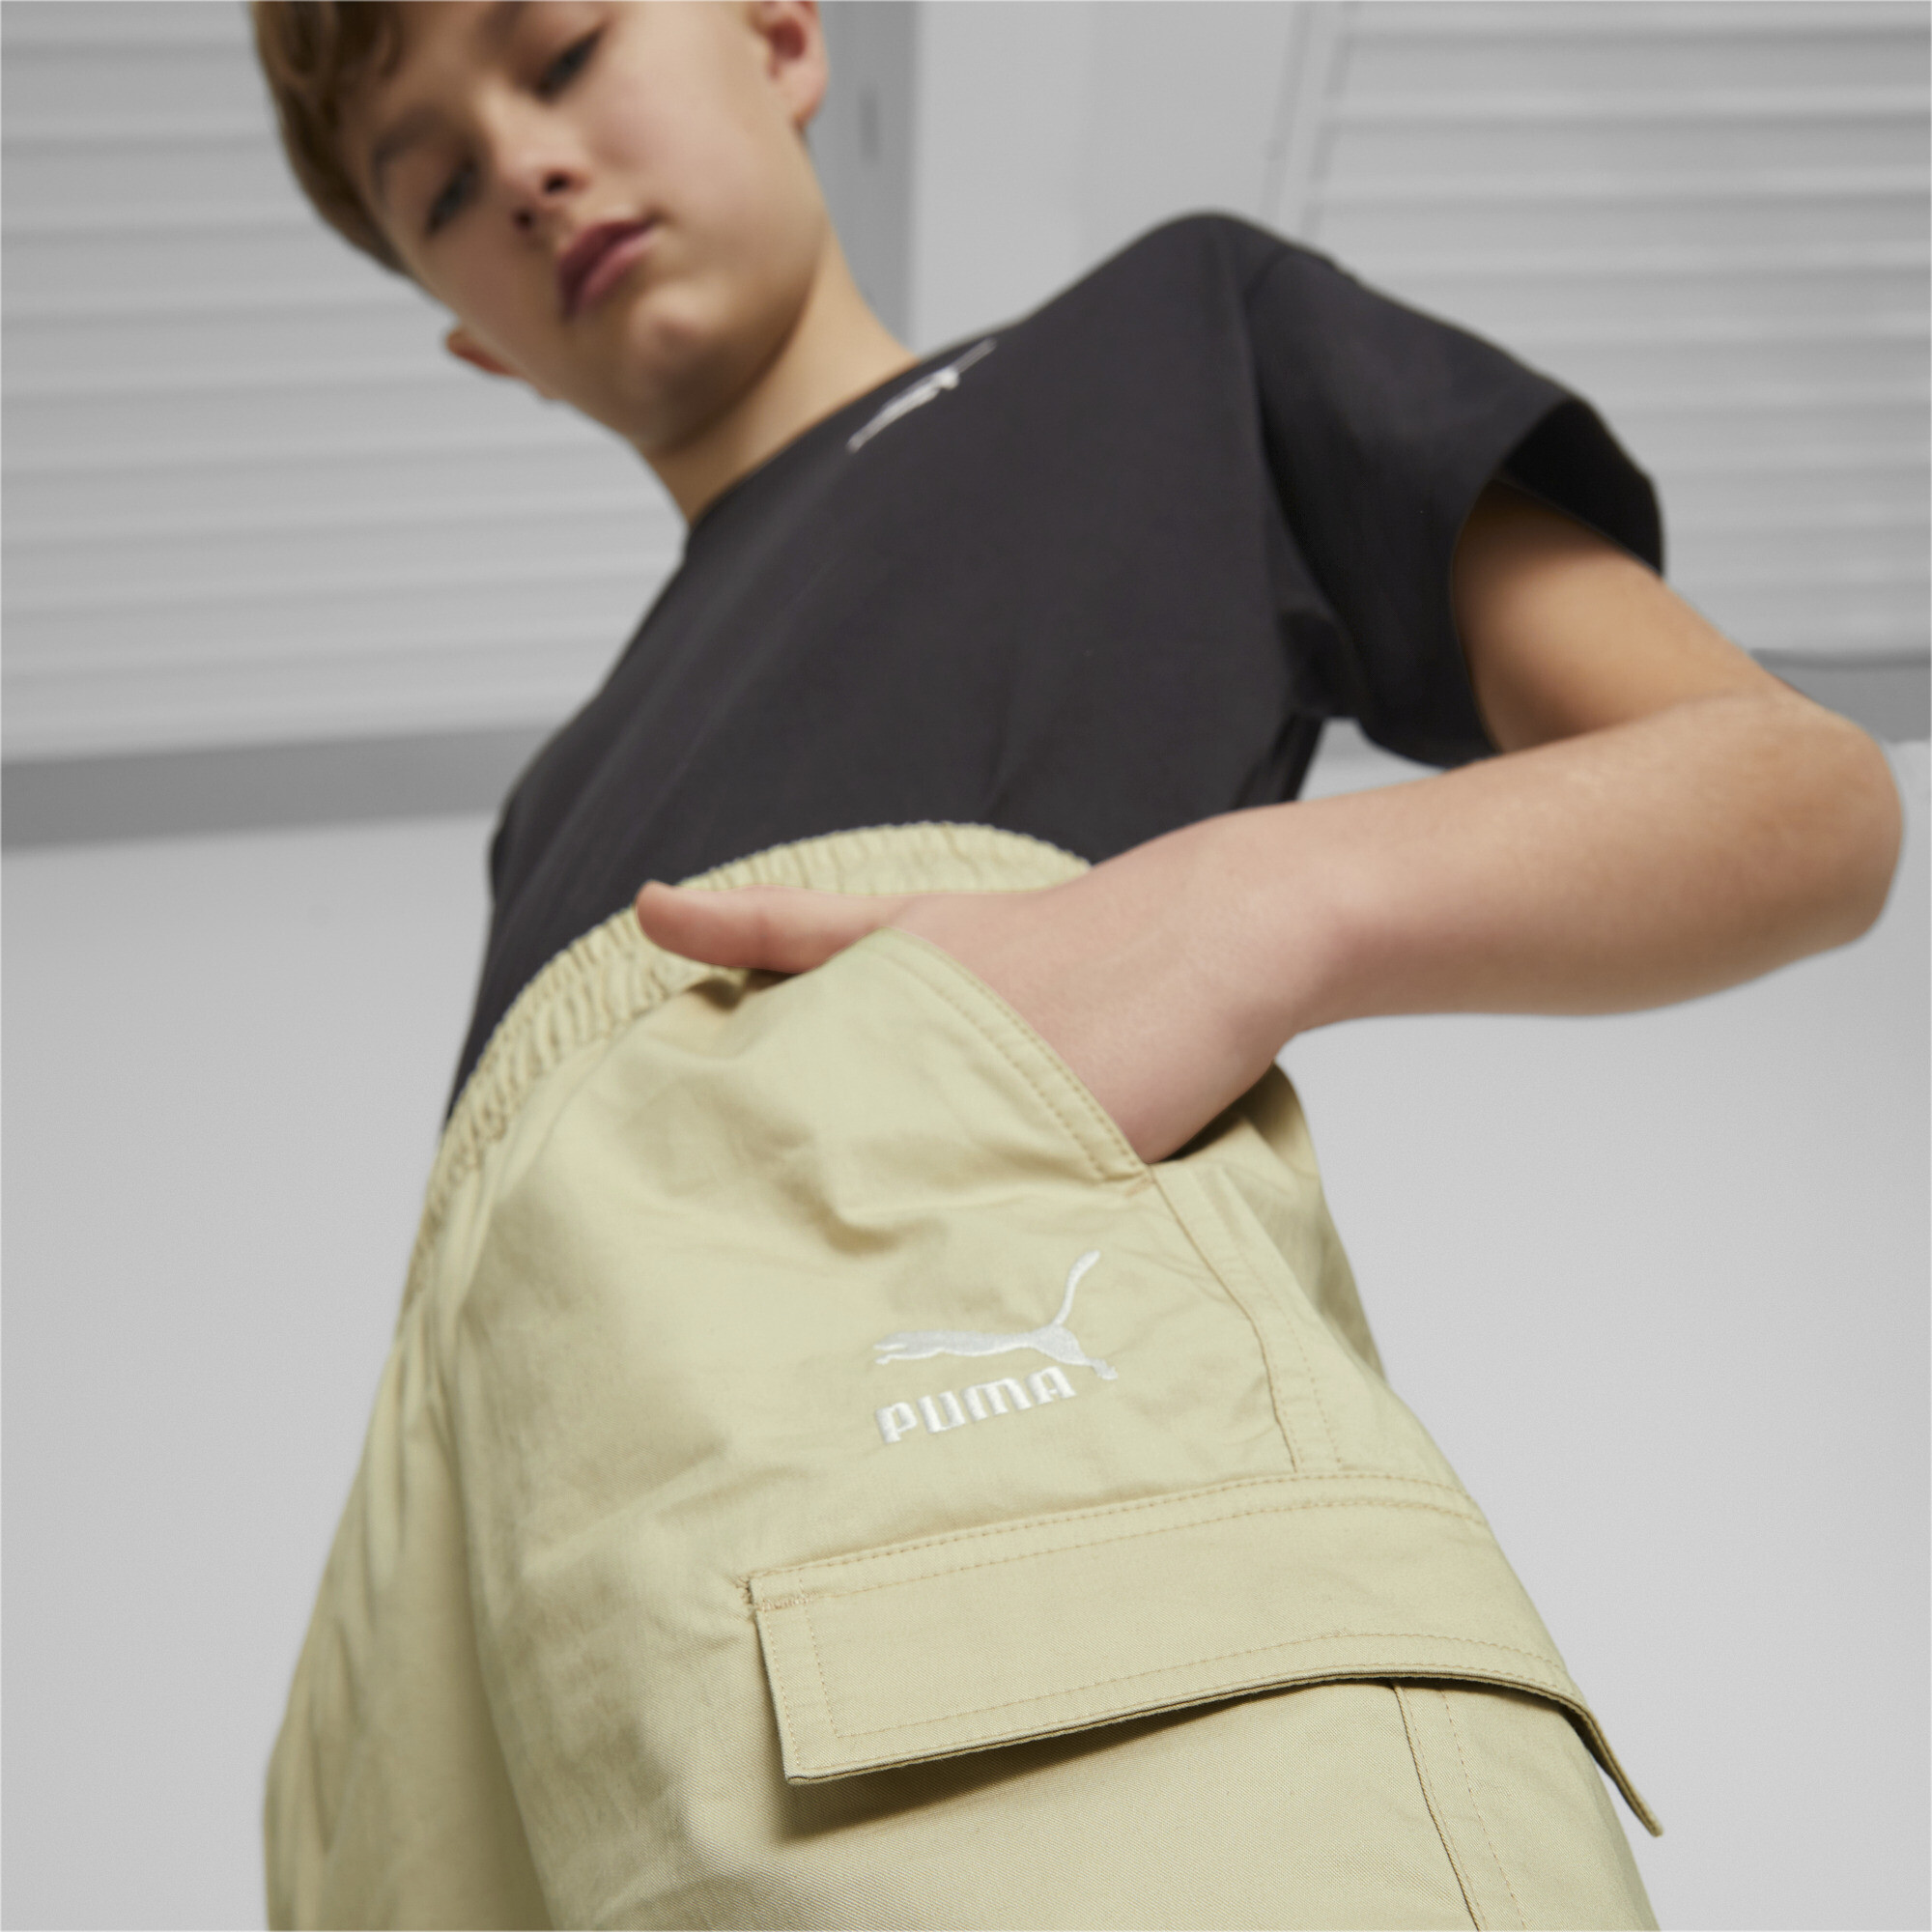 PUMA Classics Woven Sweatpants In Beige, Size 15-16 Youth